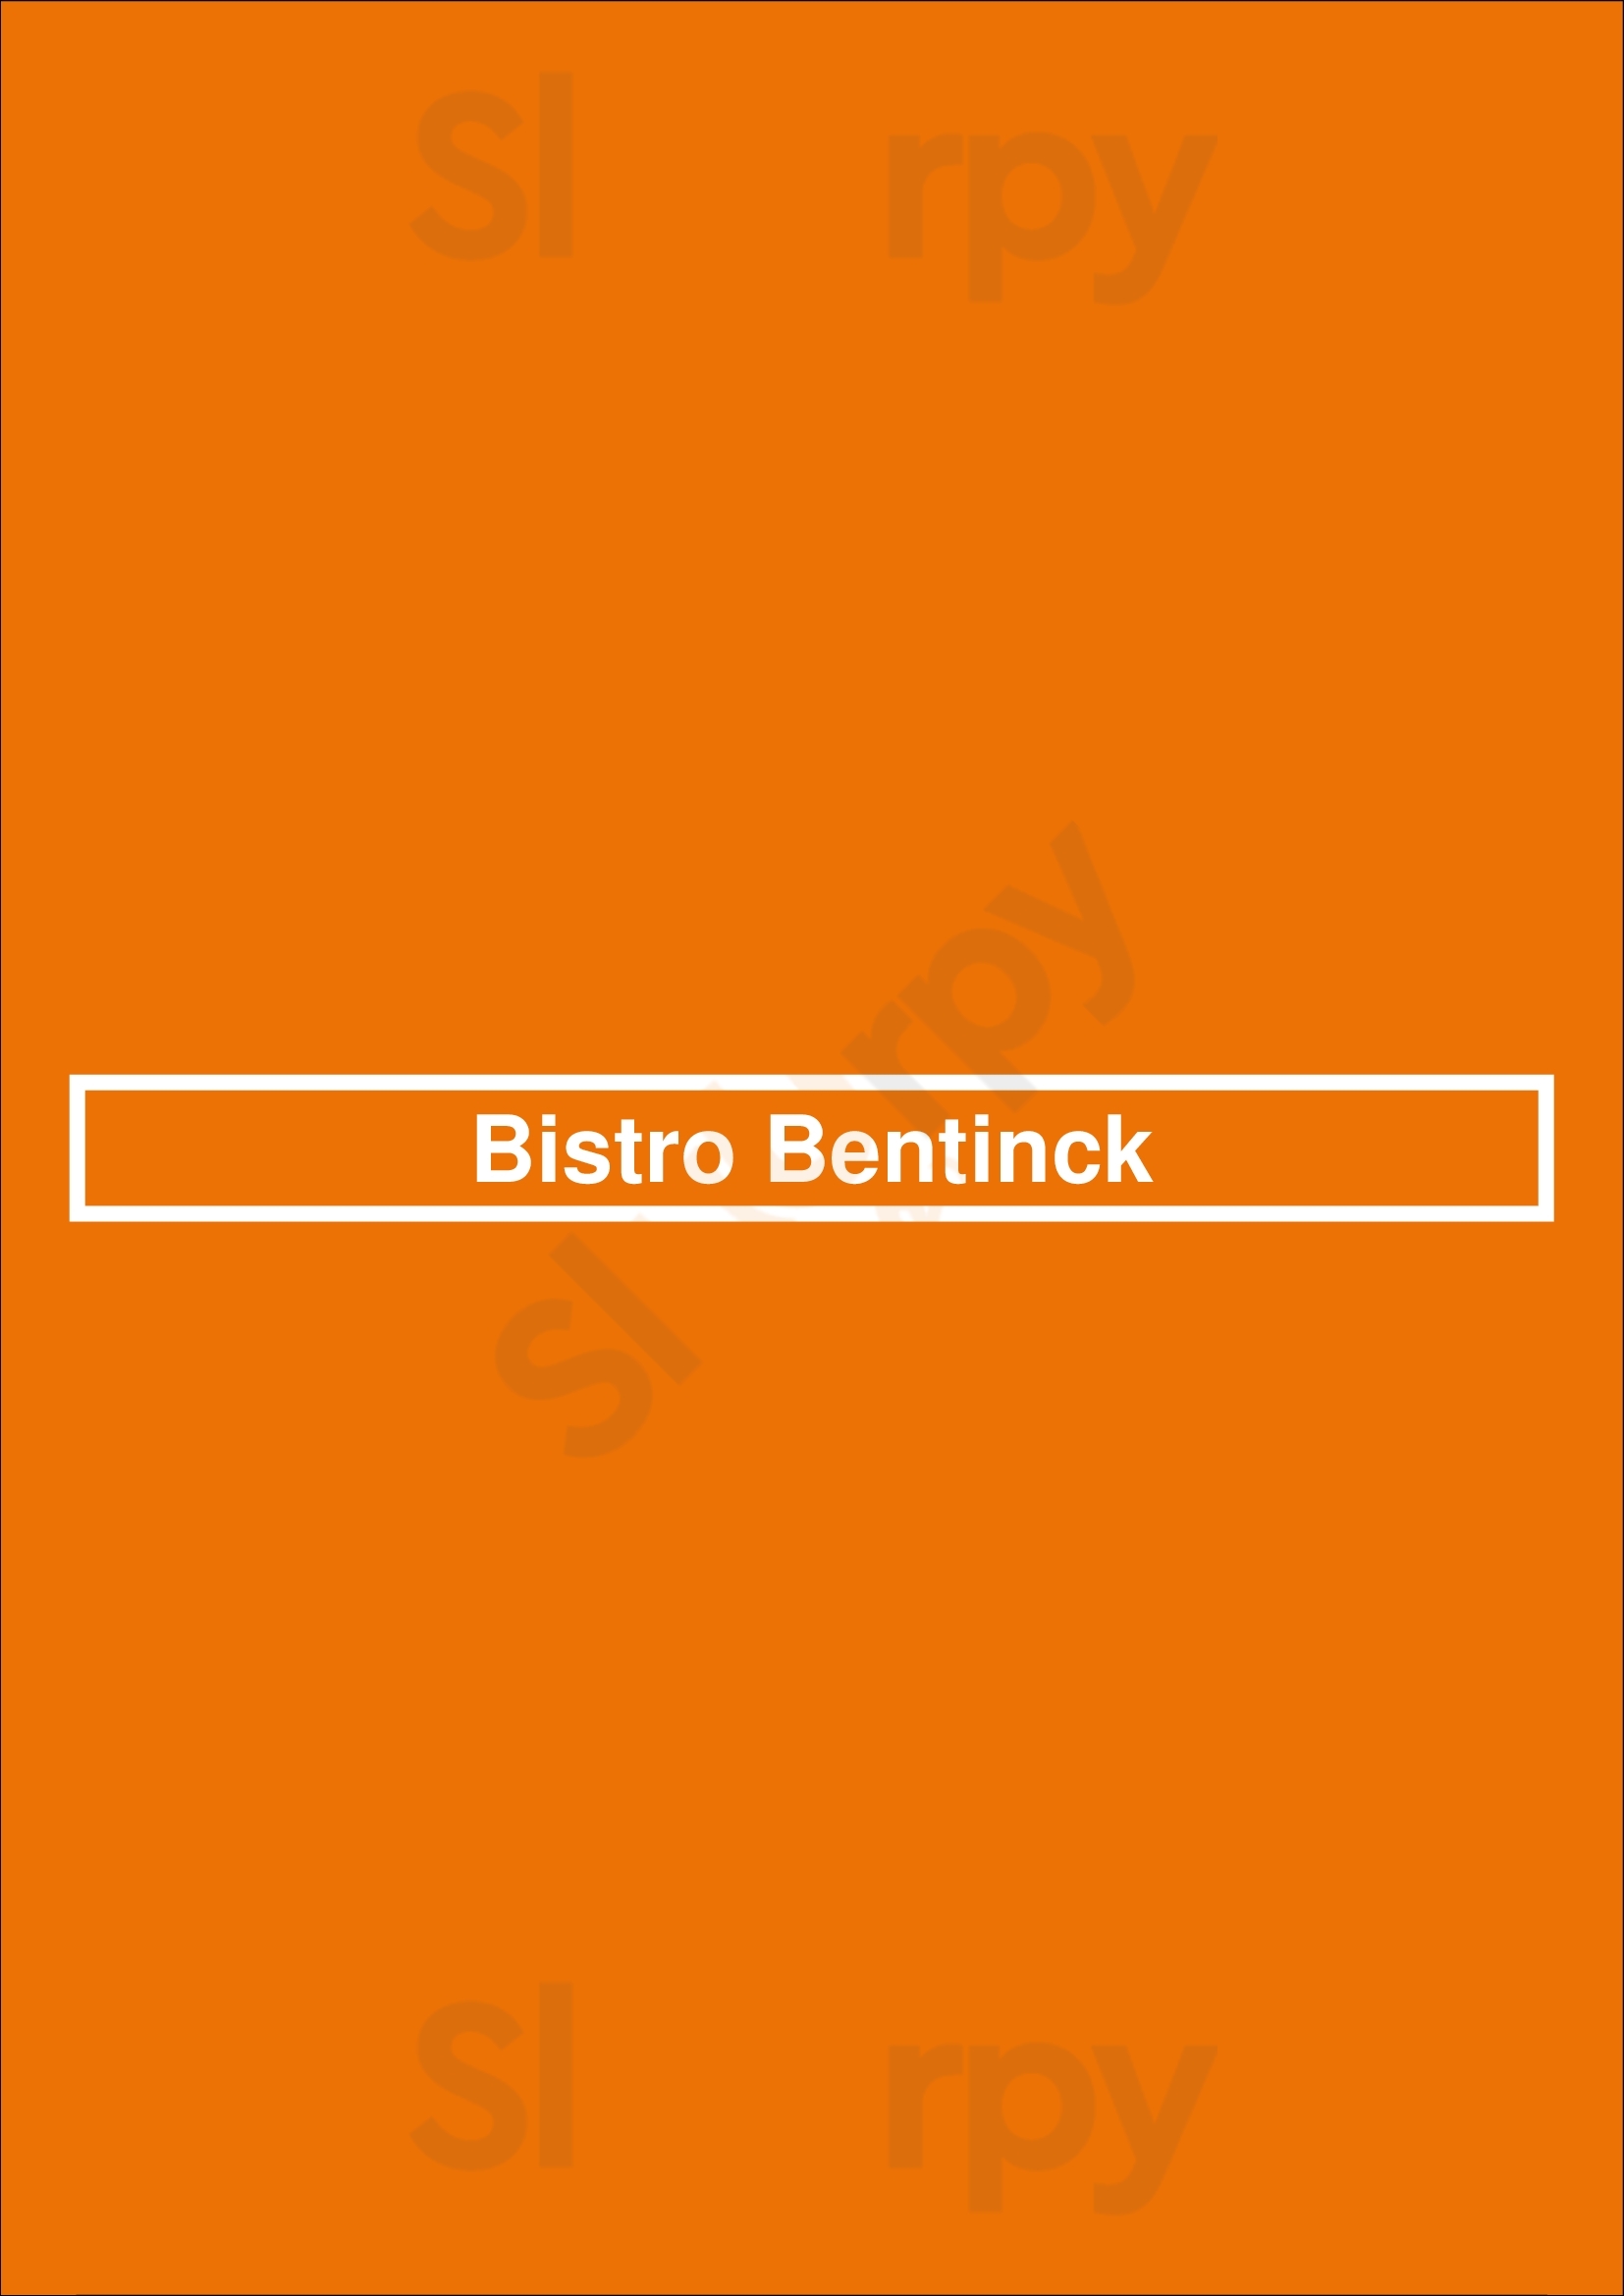 Bistro Bentinck Amsterdam Menu - 1